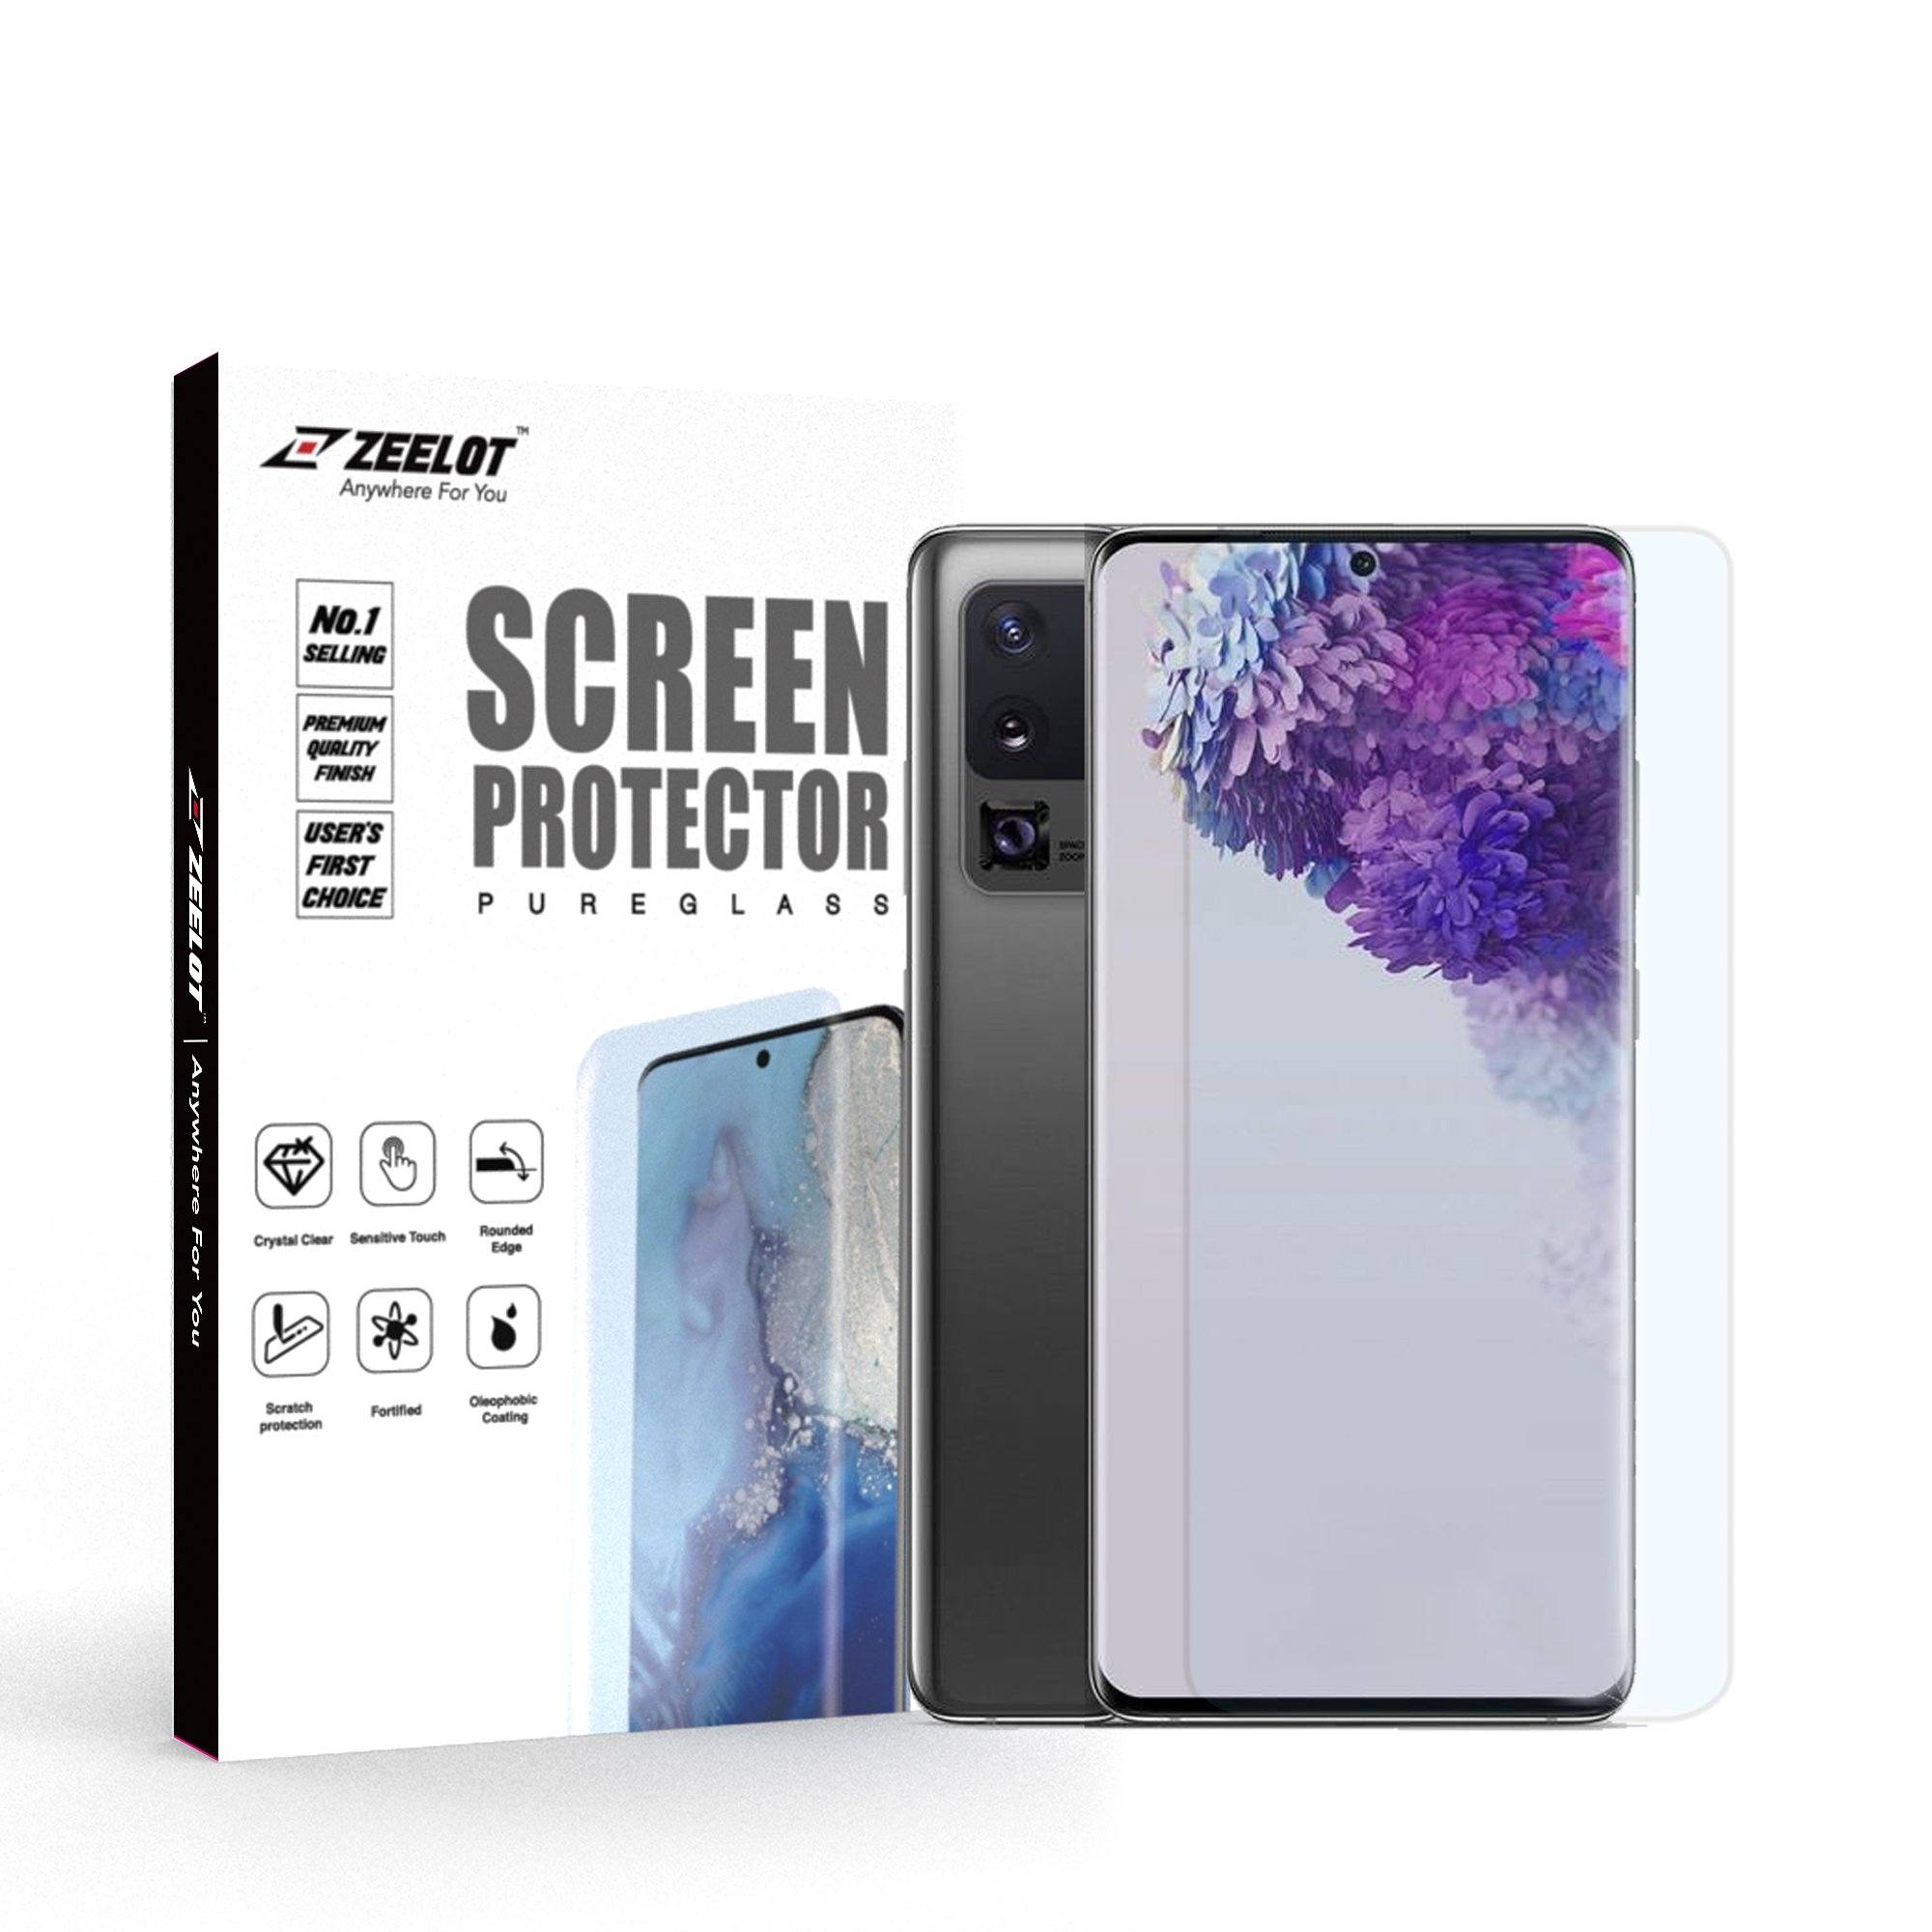 ZEELOT PureGlass 3D Clear LOCA Corning Tempered Glass Screen Protector for Samsung Galaxy S20 Ultra LOCA Tempered Glass Zeelot 